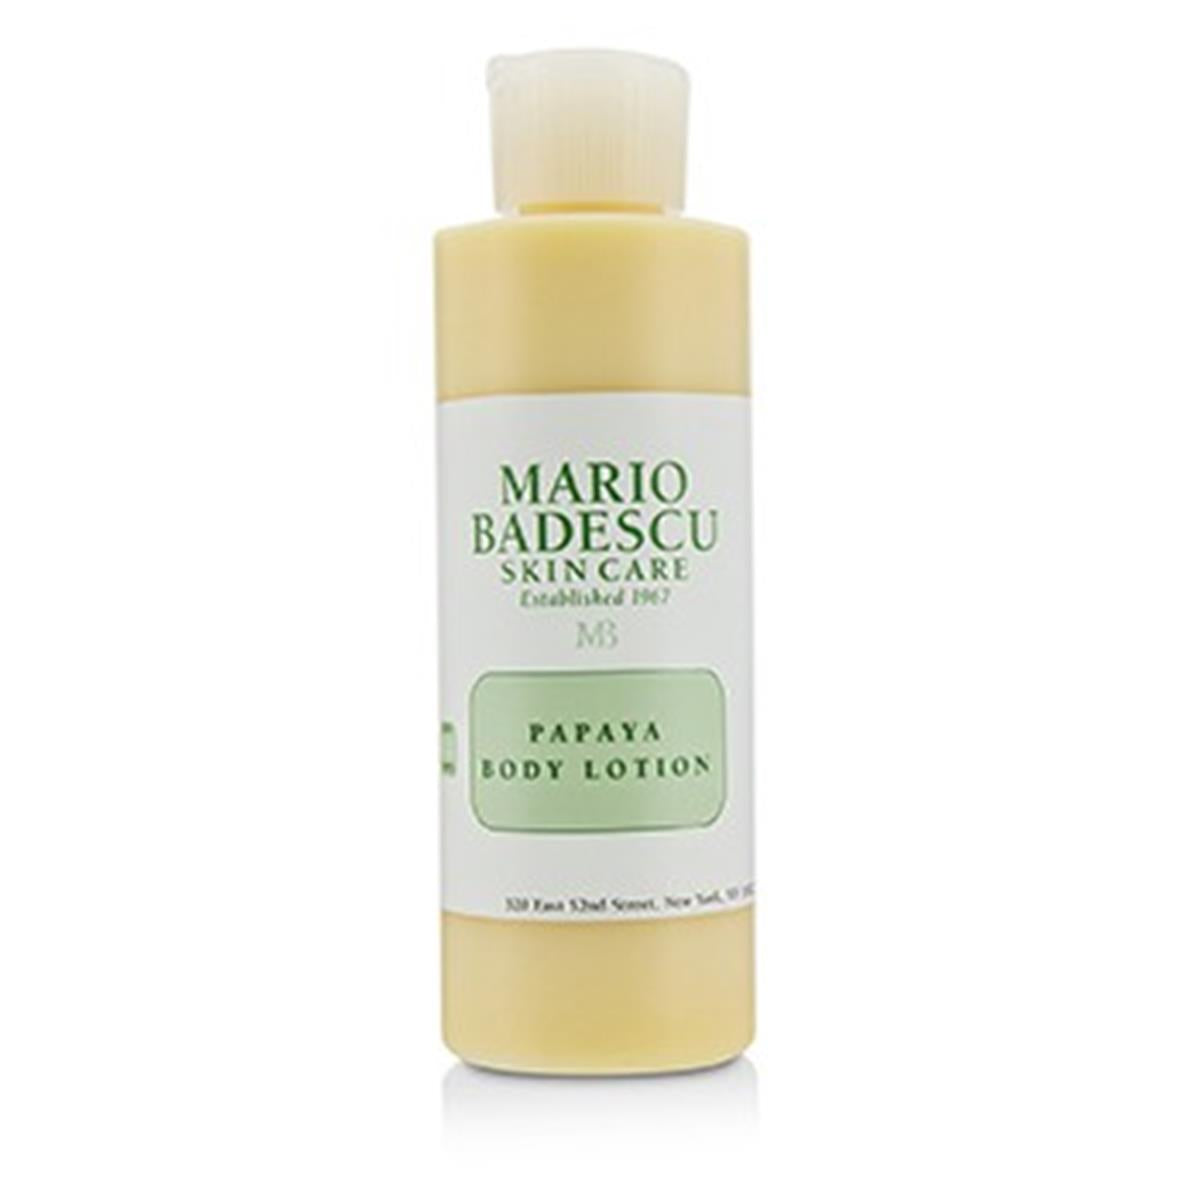 Mario Badescu 216673 6 oz Papaya Body Lotion for All Skin Types One Size